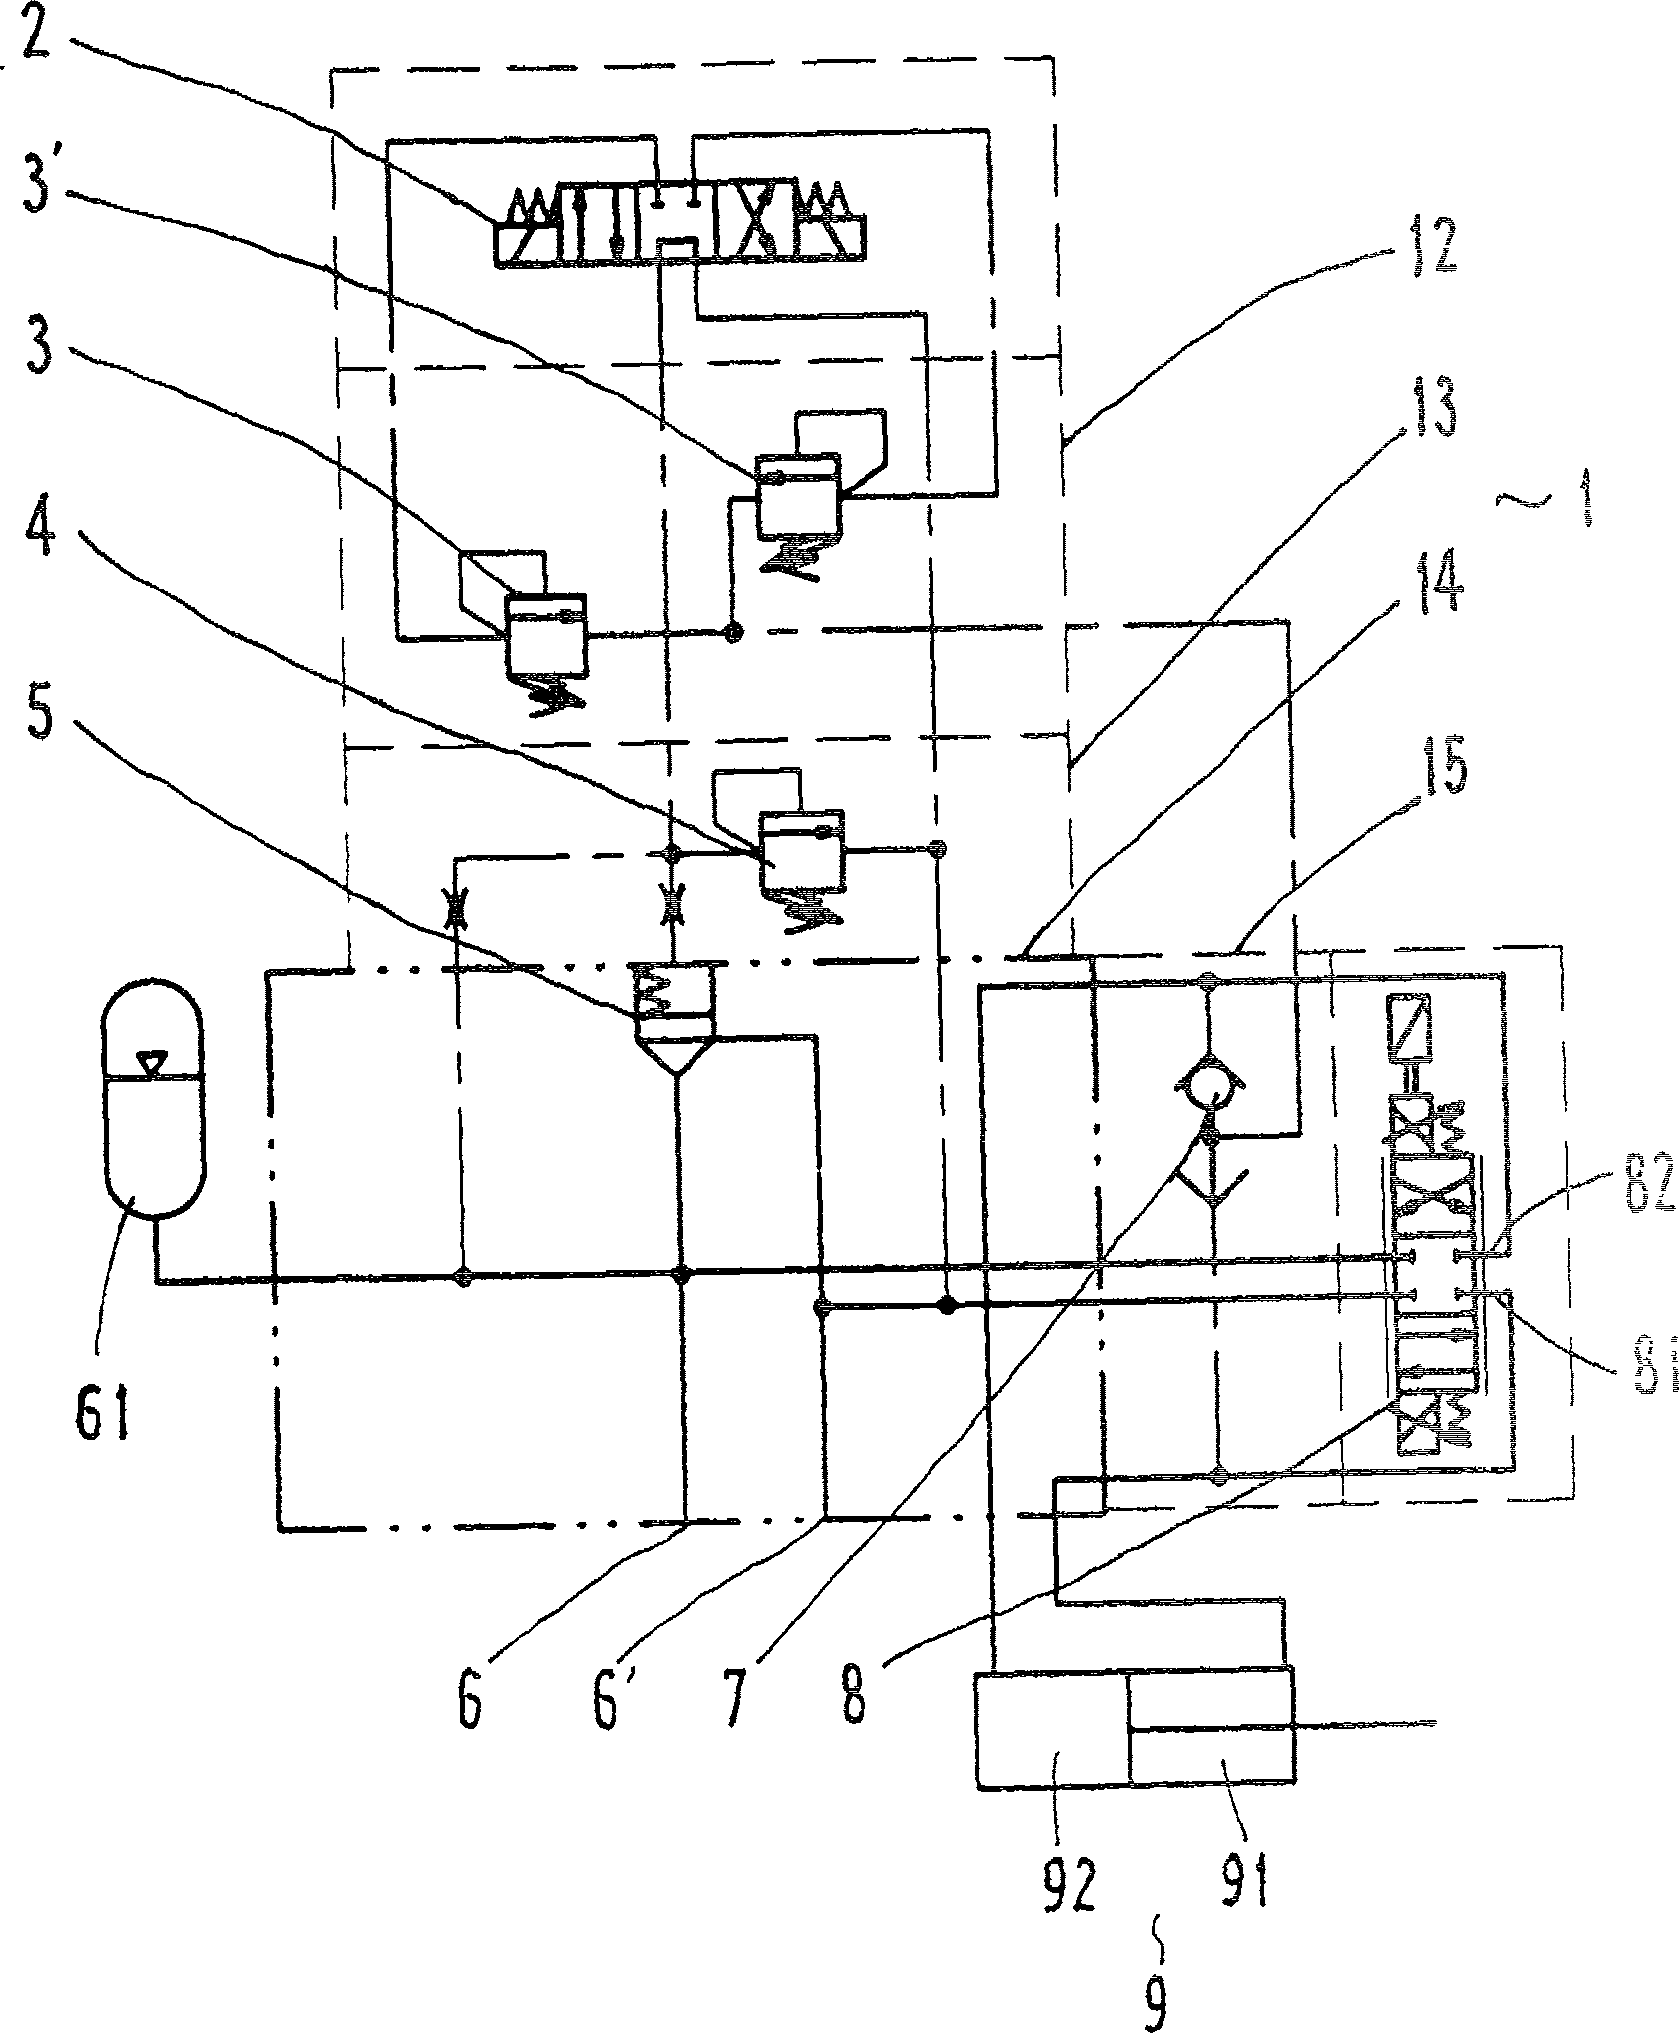 Functional switching set of servo actuator